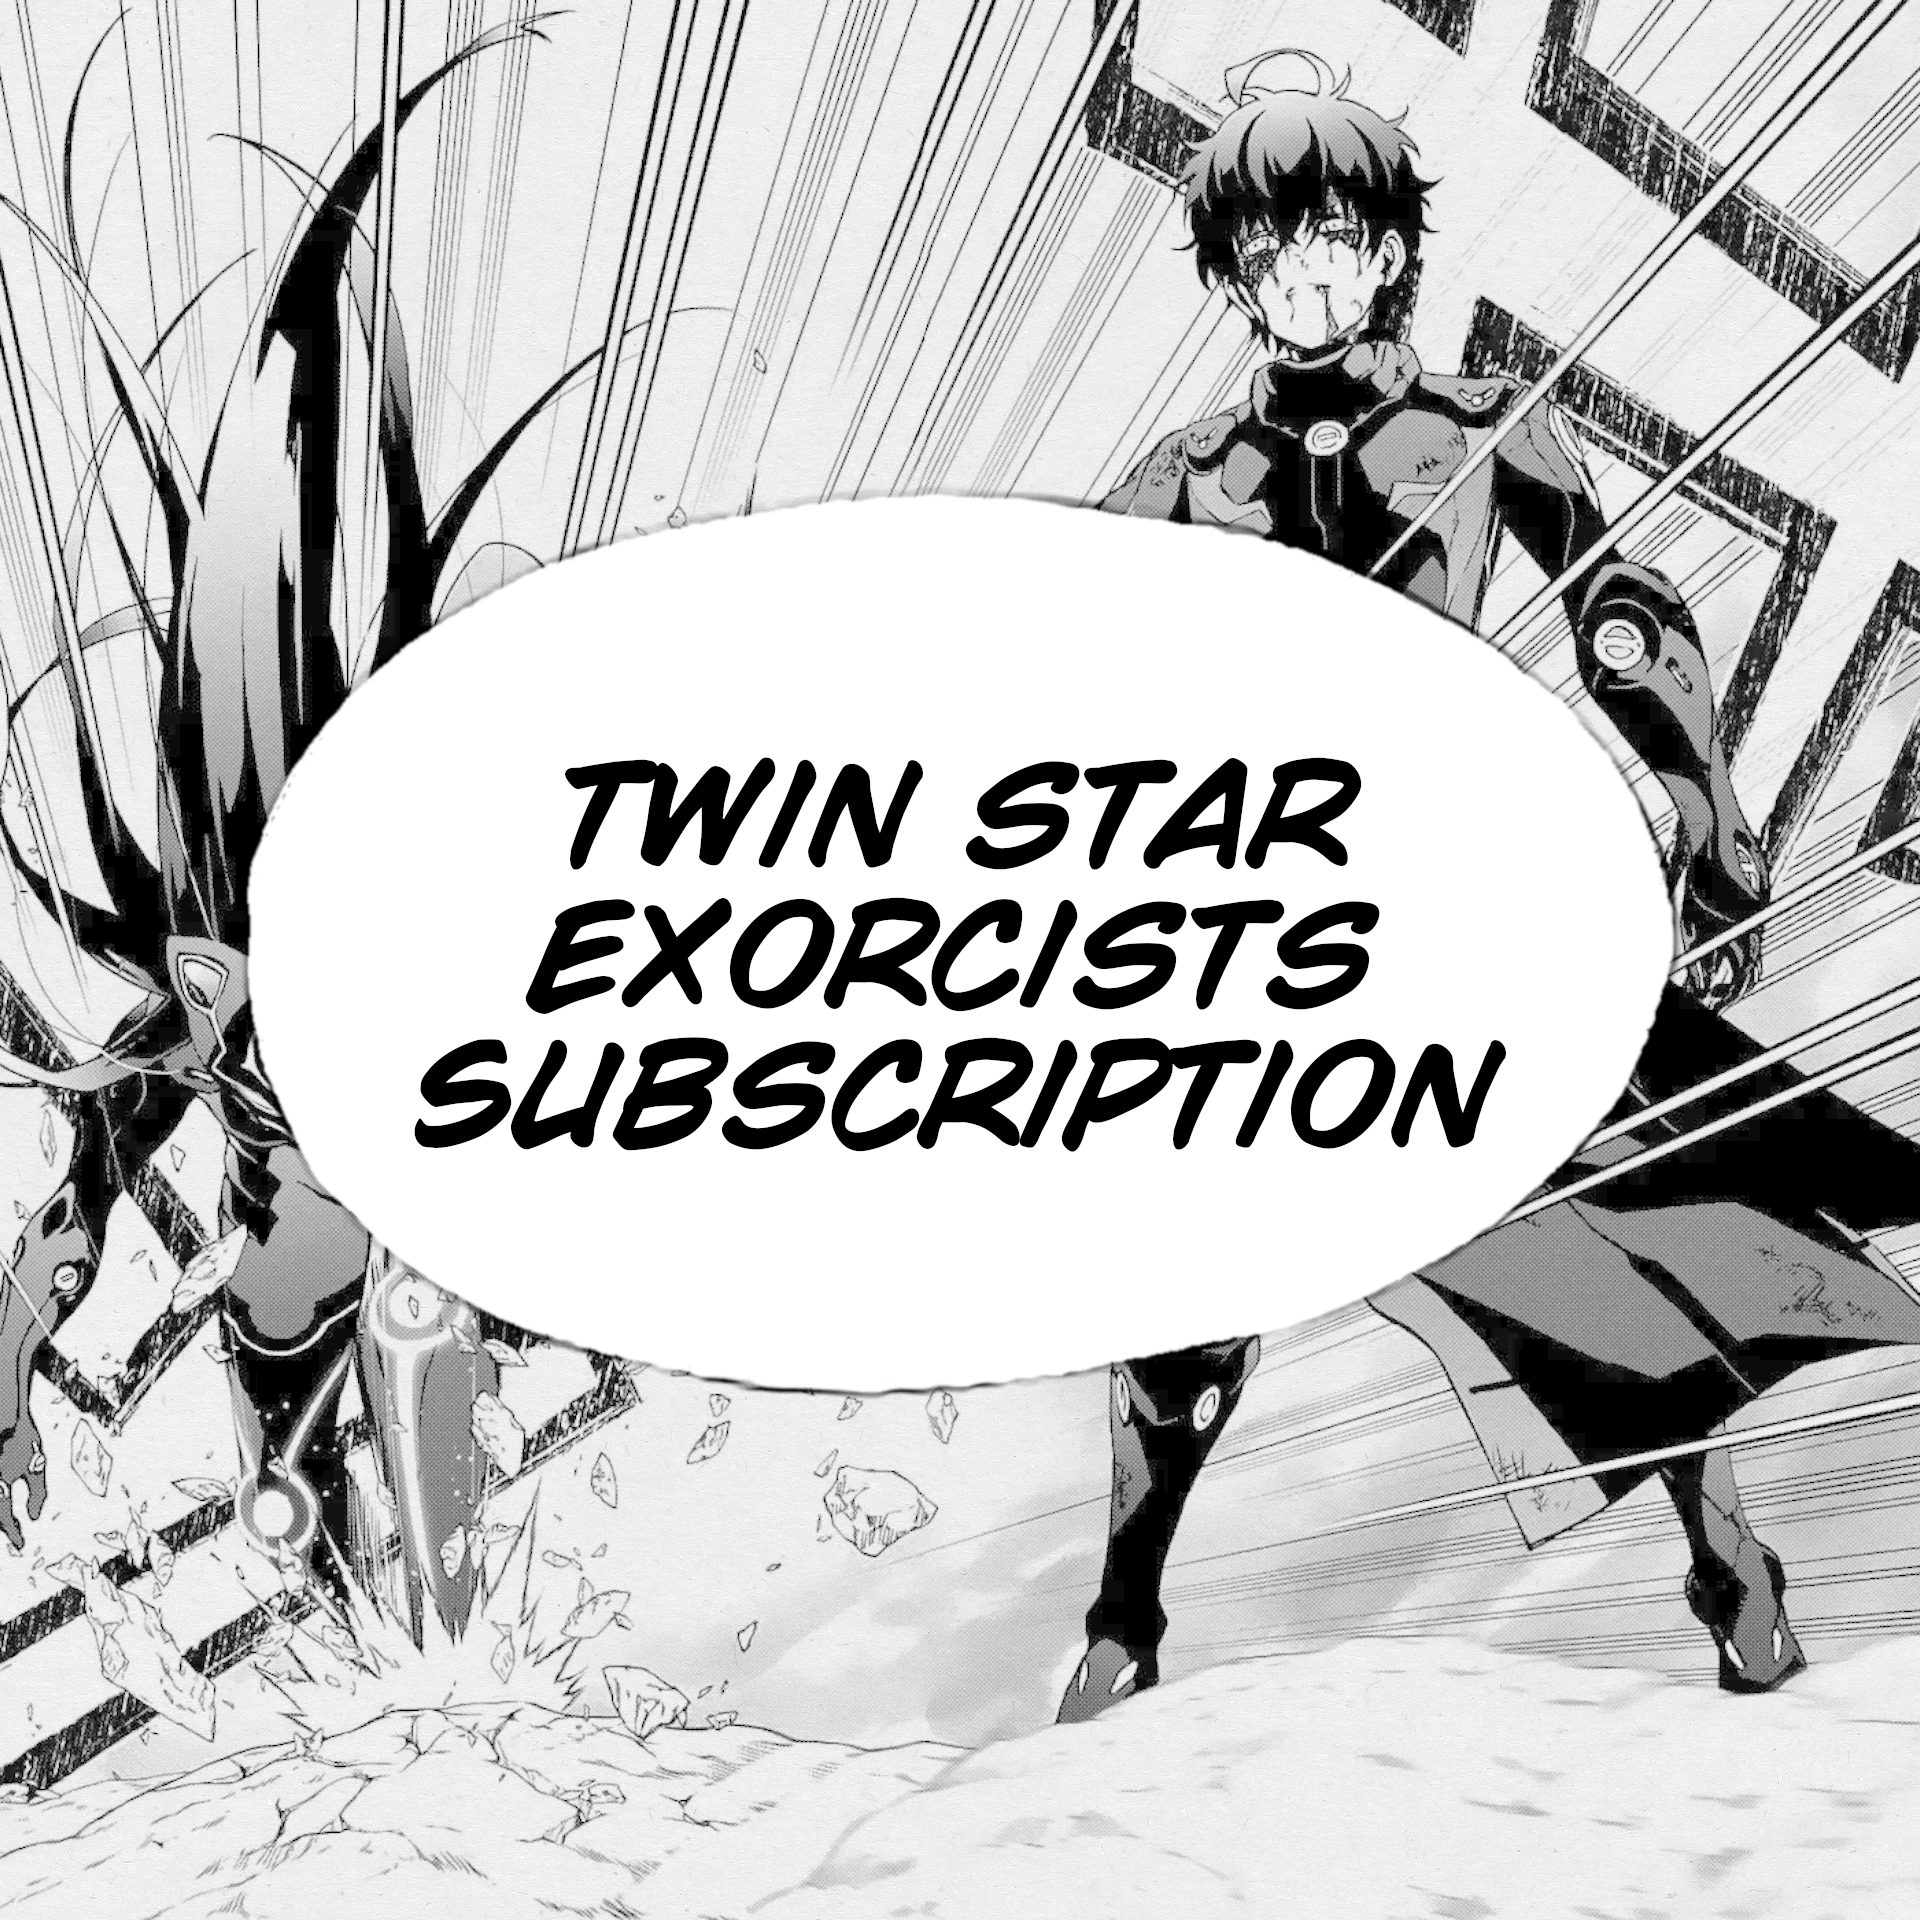 Twin Star Exorcists Manga Volume 19